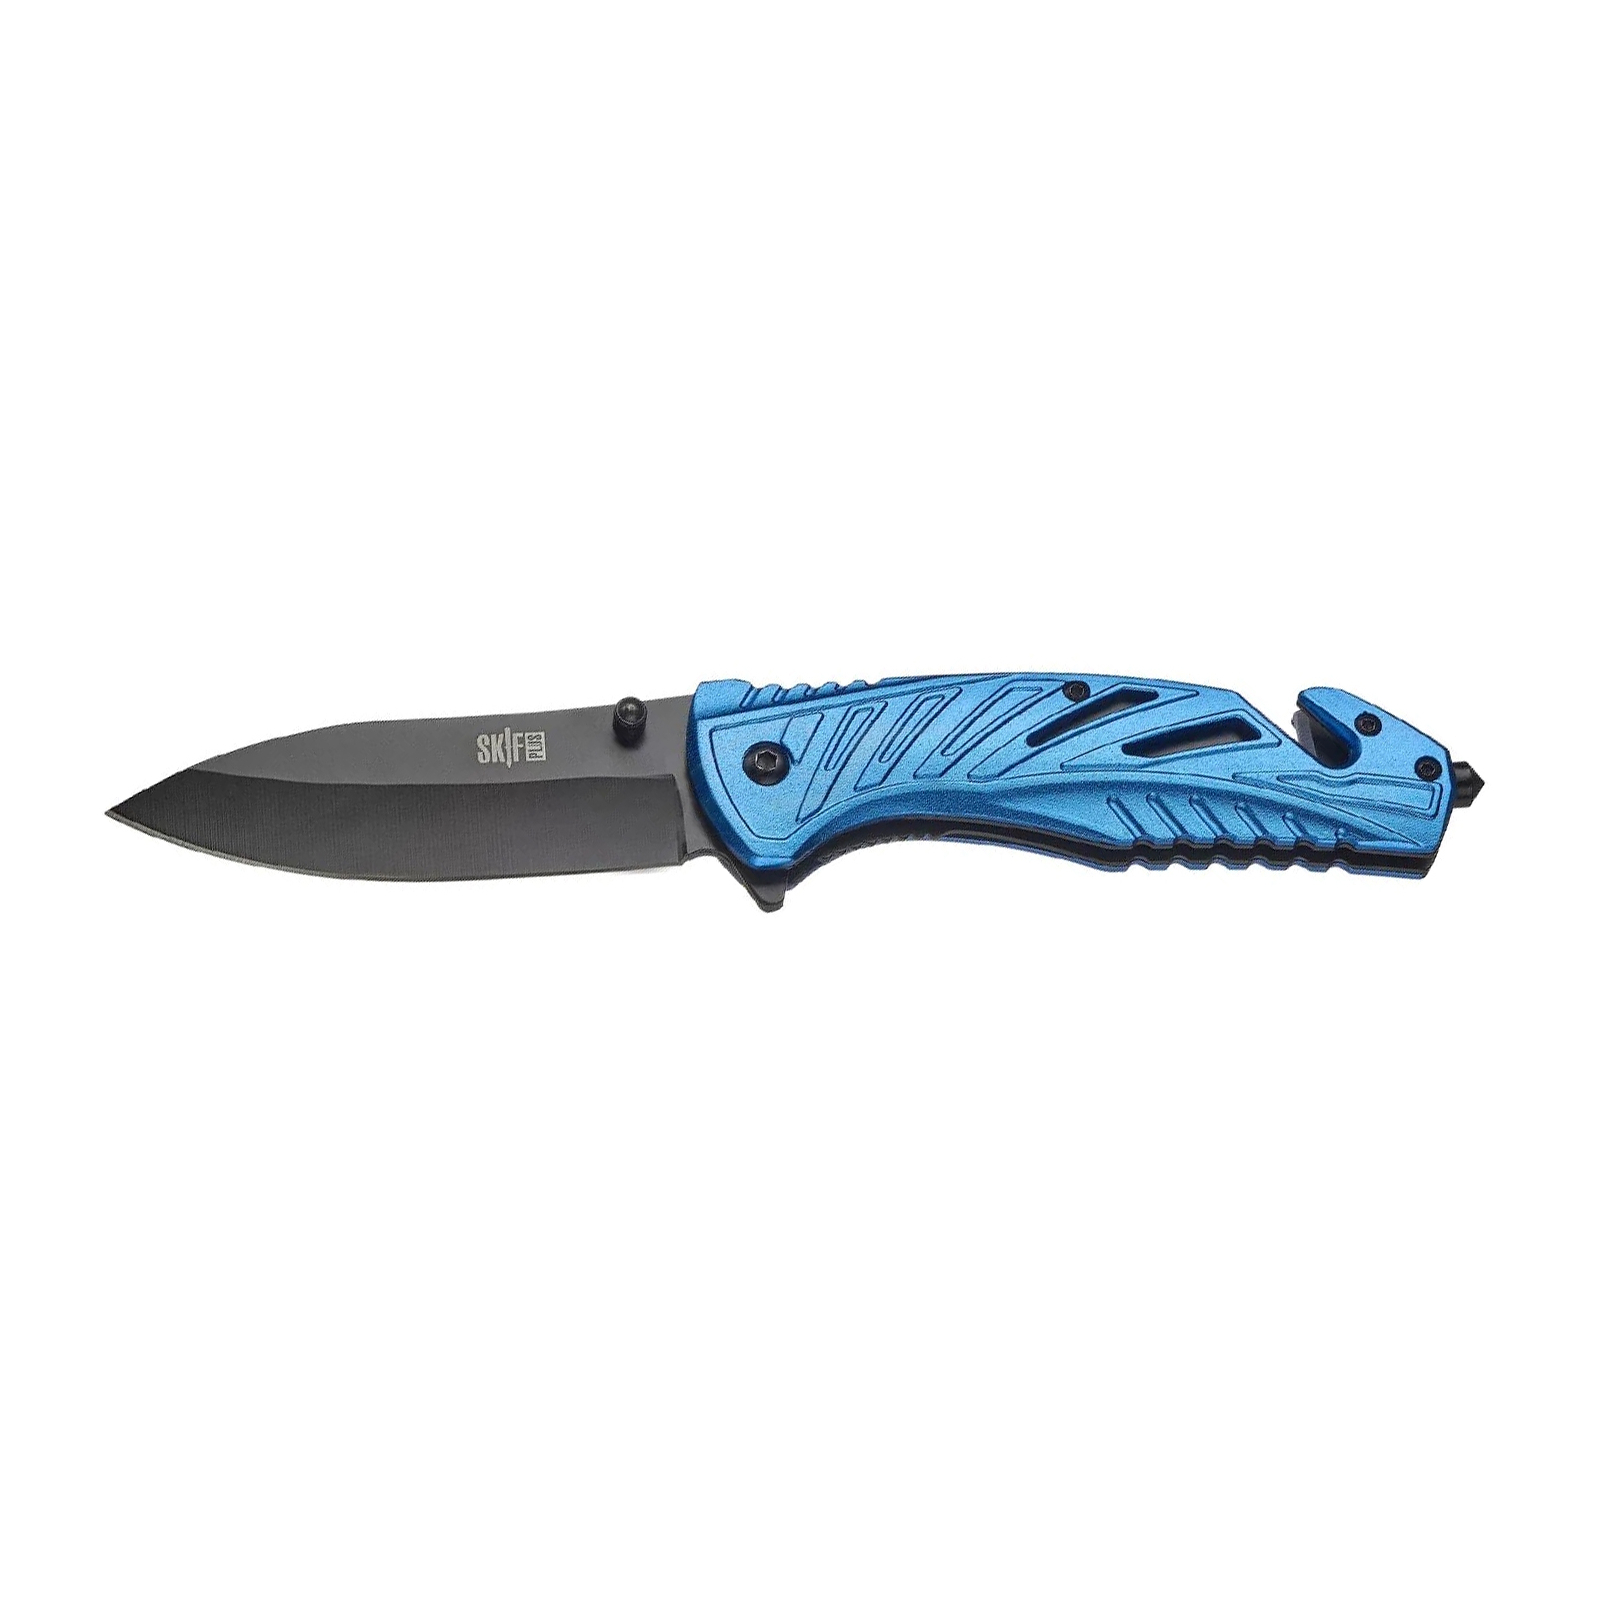 Нож Active Horse Blue (SPK6BL)